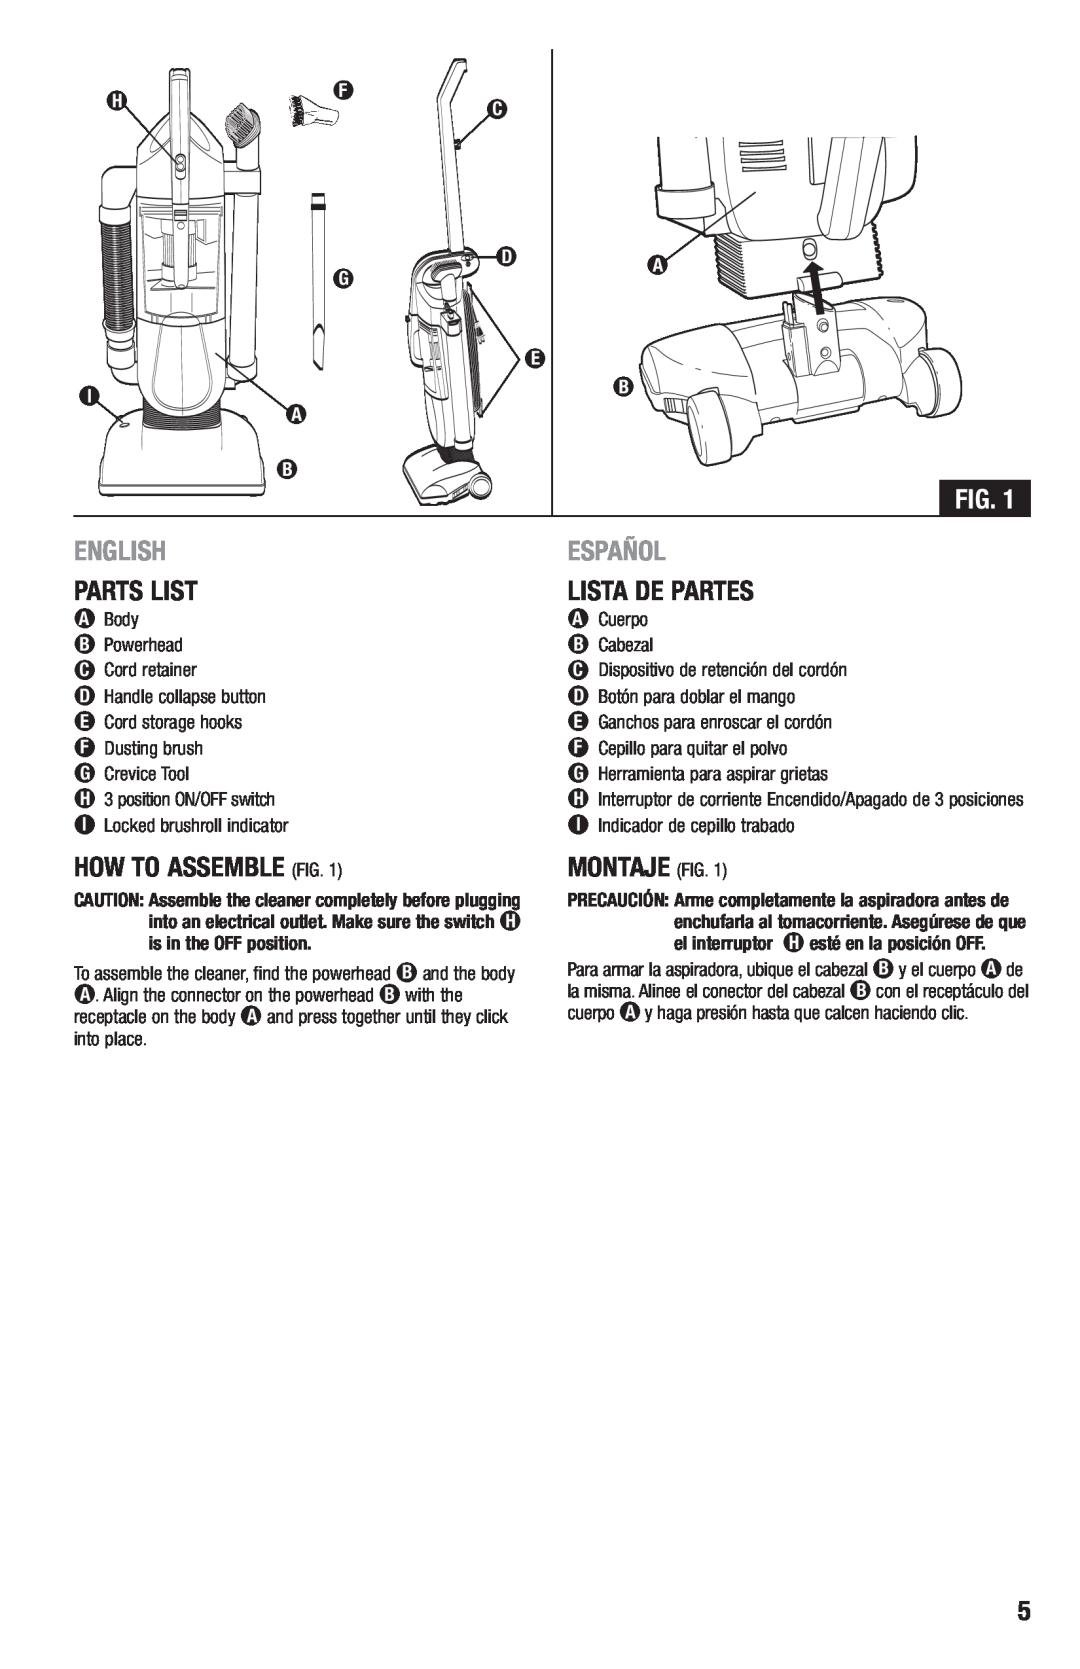 Eureka 410 manual Parts List, Lista De Partes, How To Assemble Fig, Montaje Fig, English, Español 